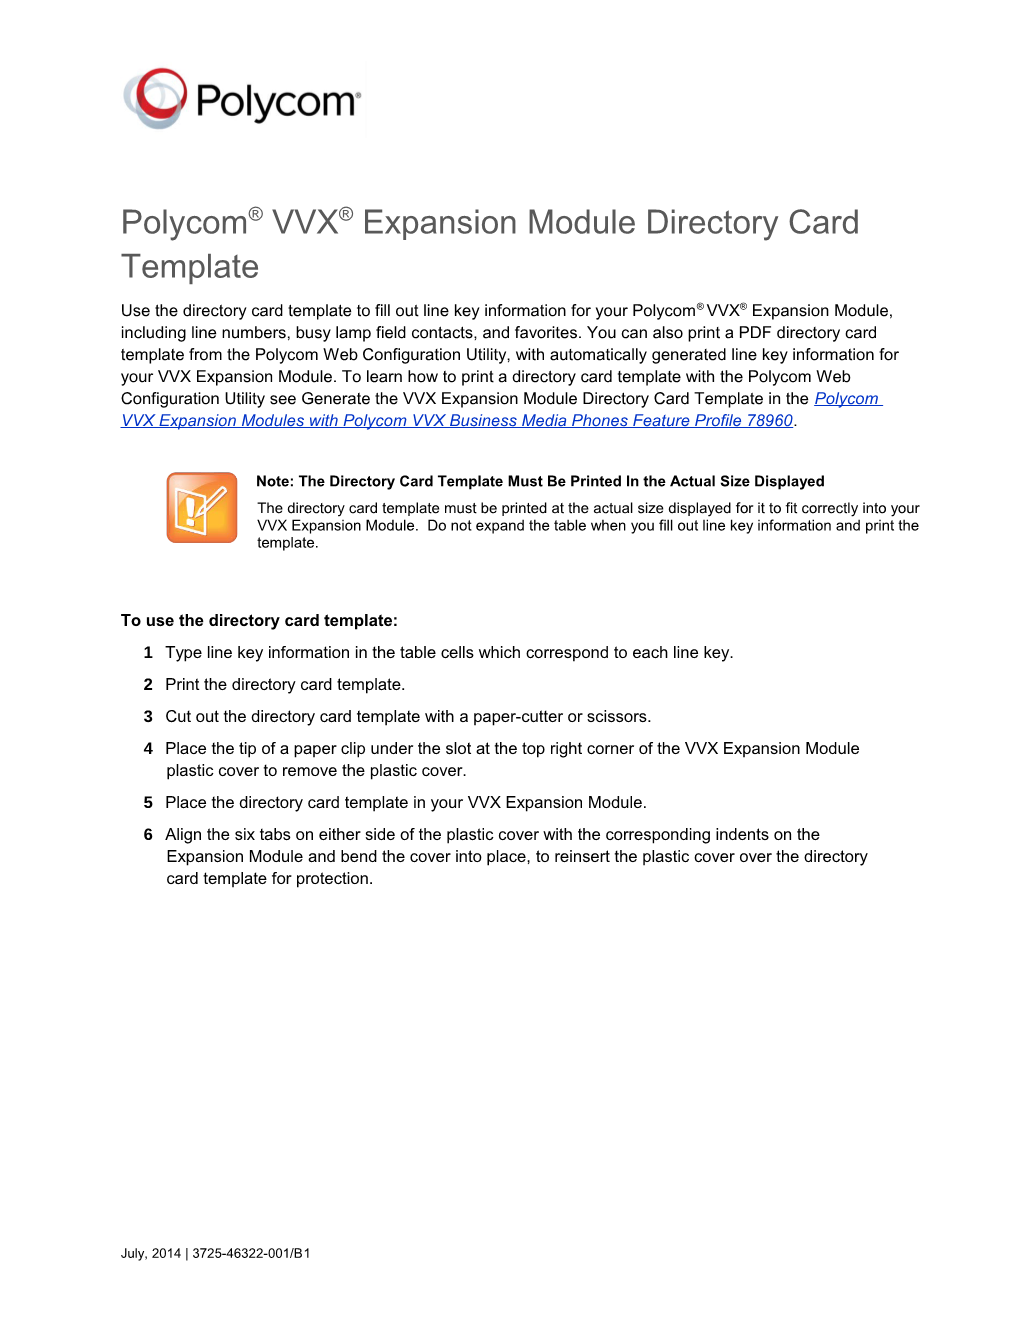 Polycom VVX Expansion Module Directory Card Template